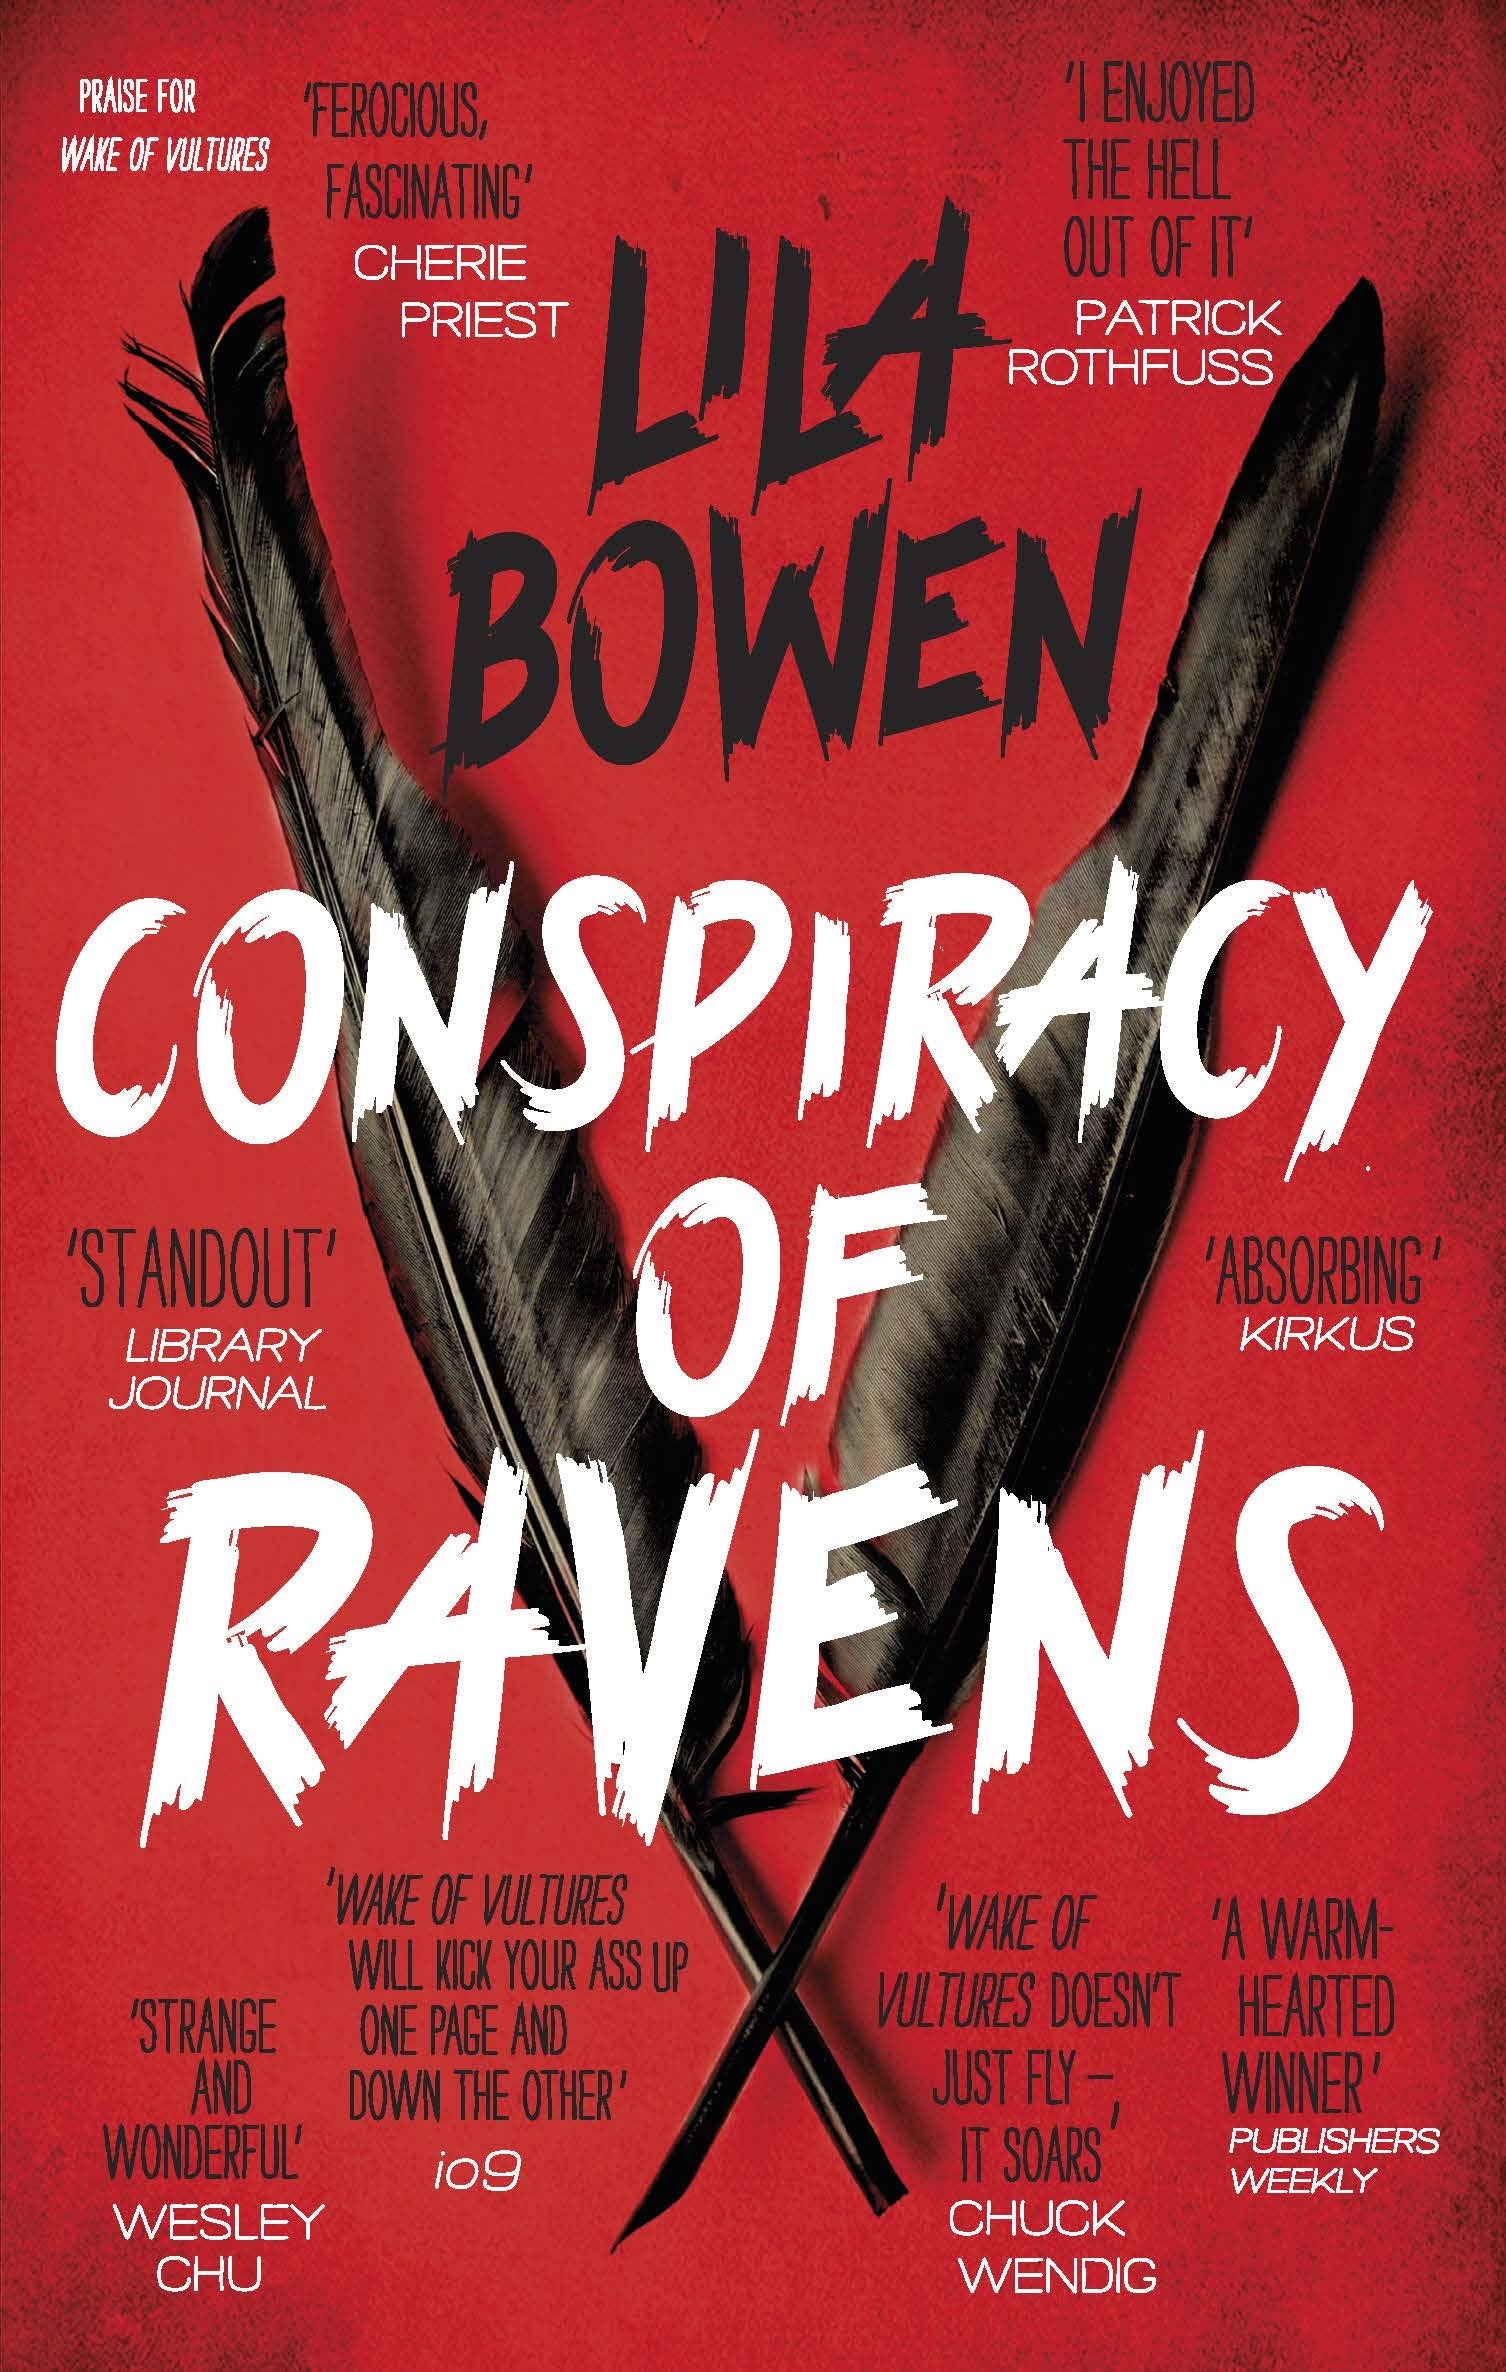 Conspiracy of Ravens by Lila Bowen